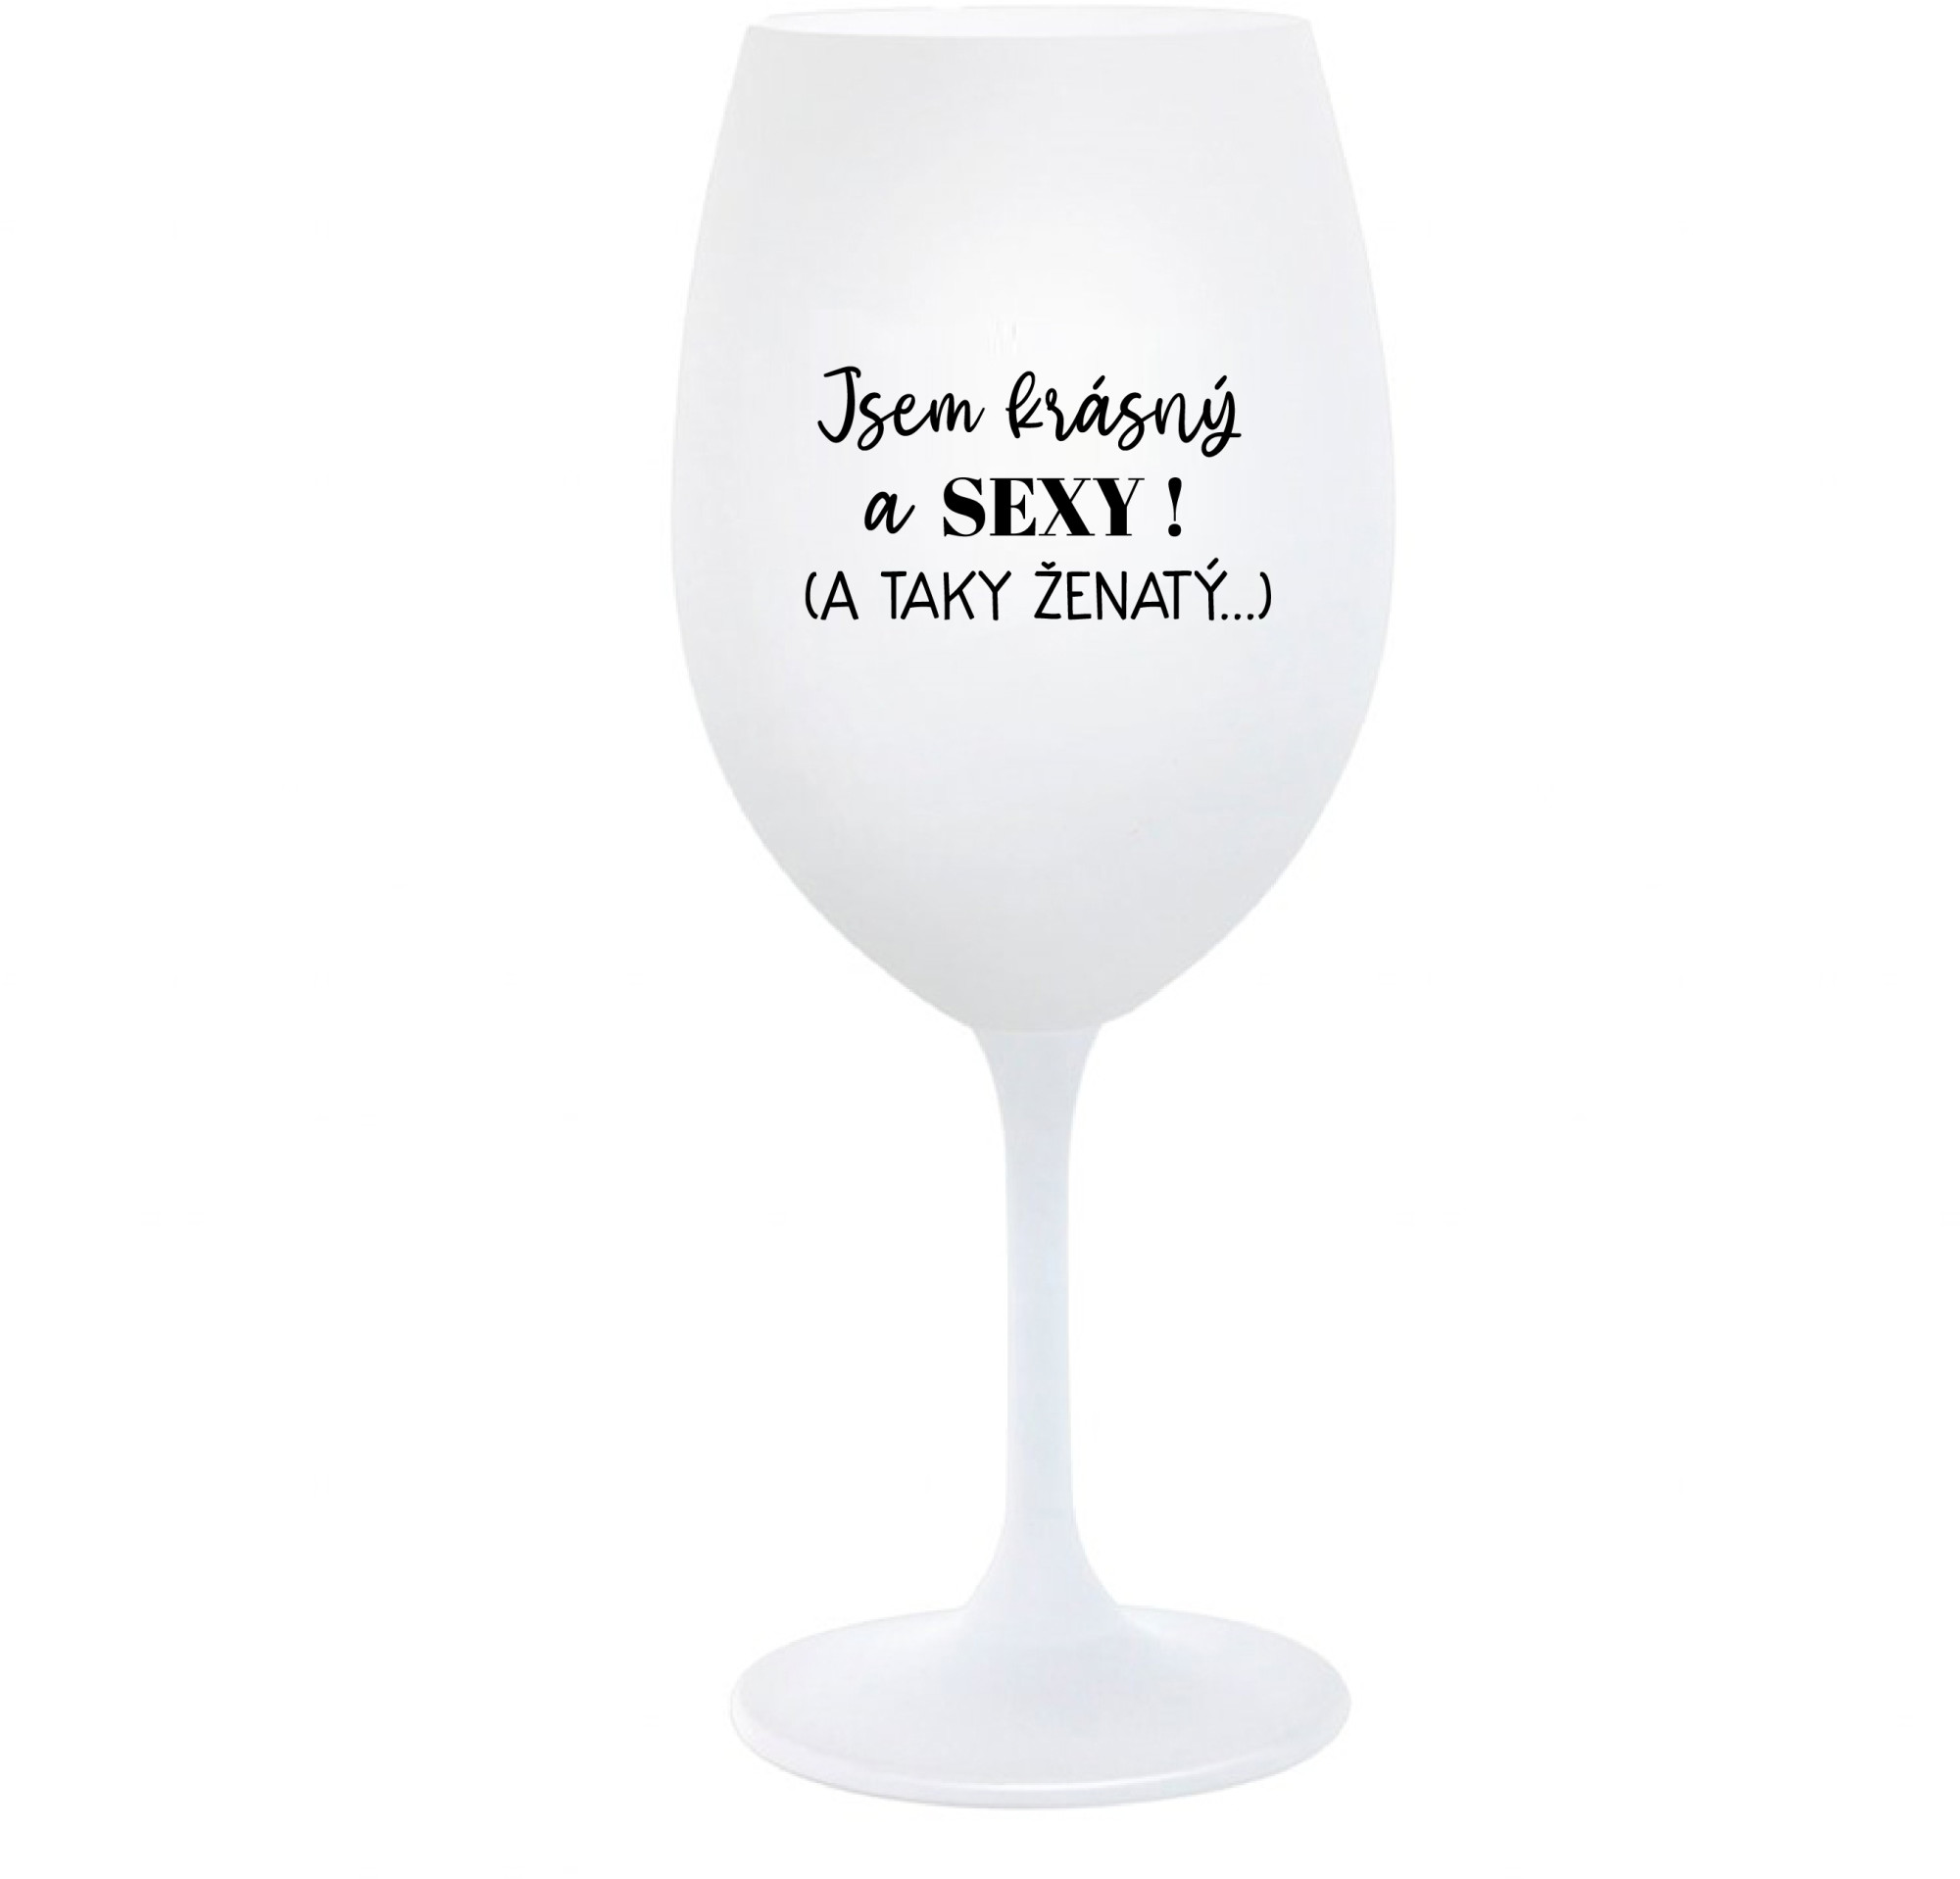 JSEM KRÁSNÝ A SEXY! (A TAKY ŽENATÝ...) - bílá sklenice na víno 350 ml